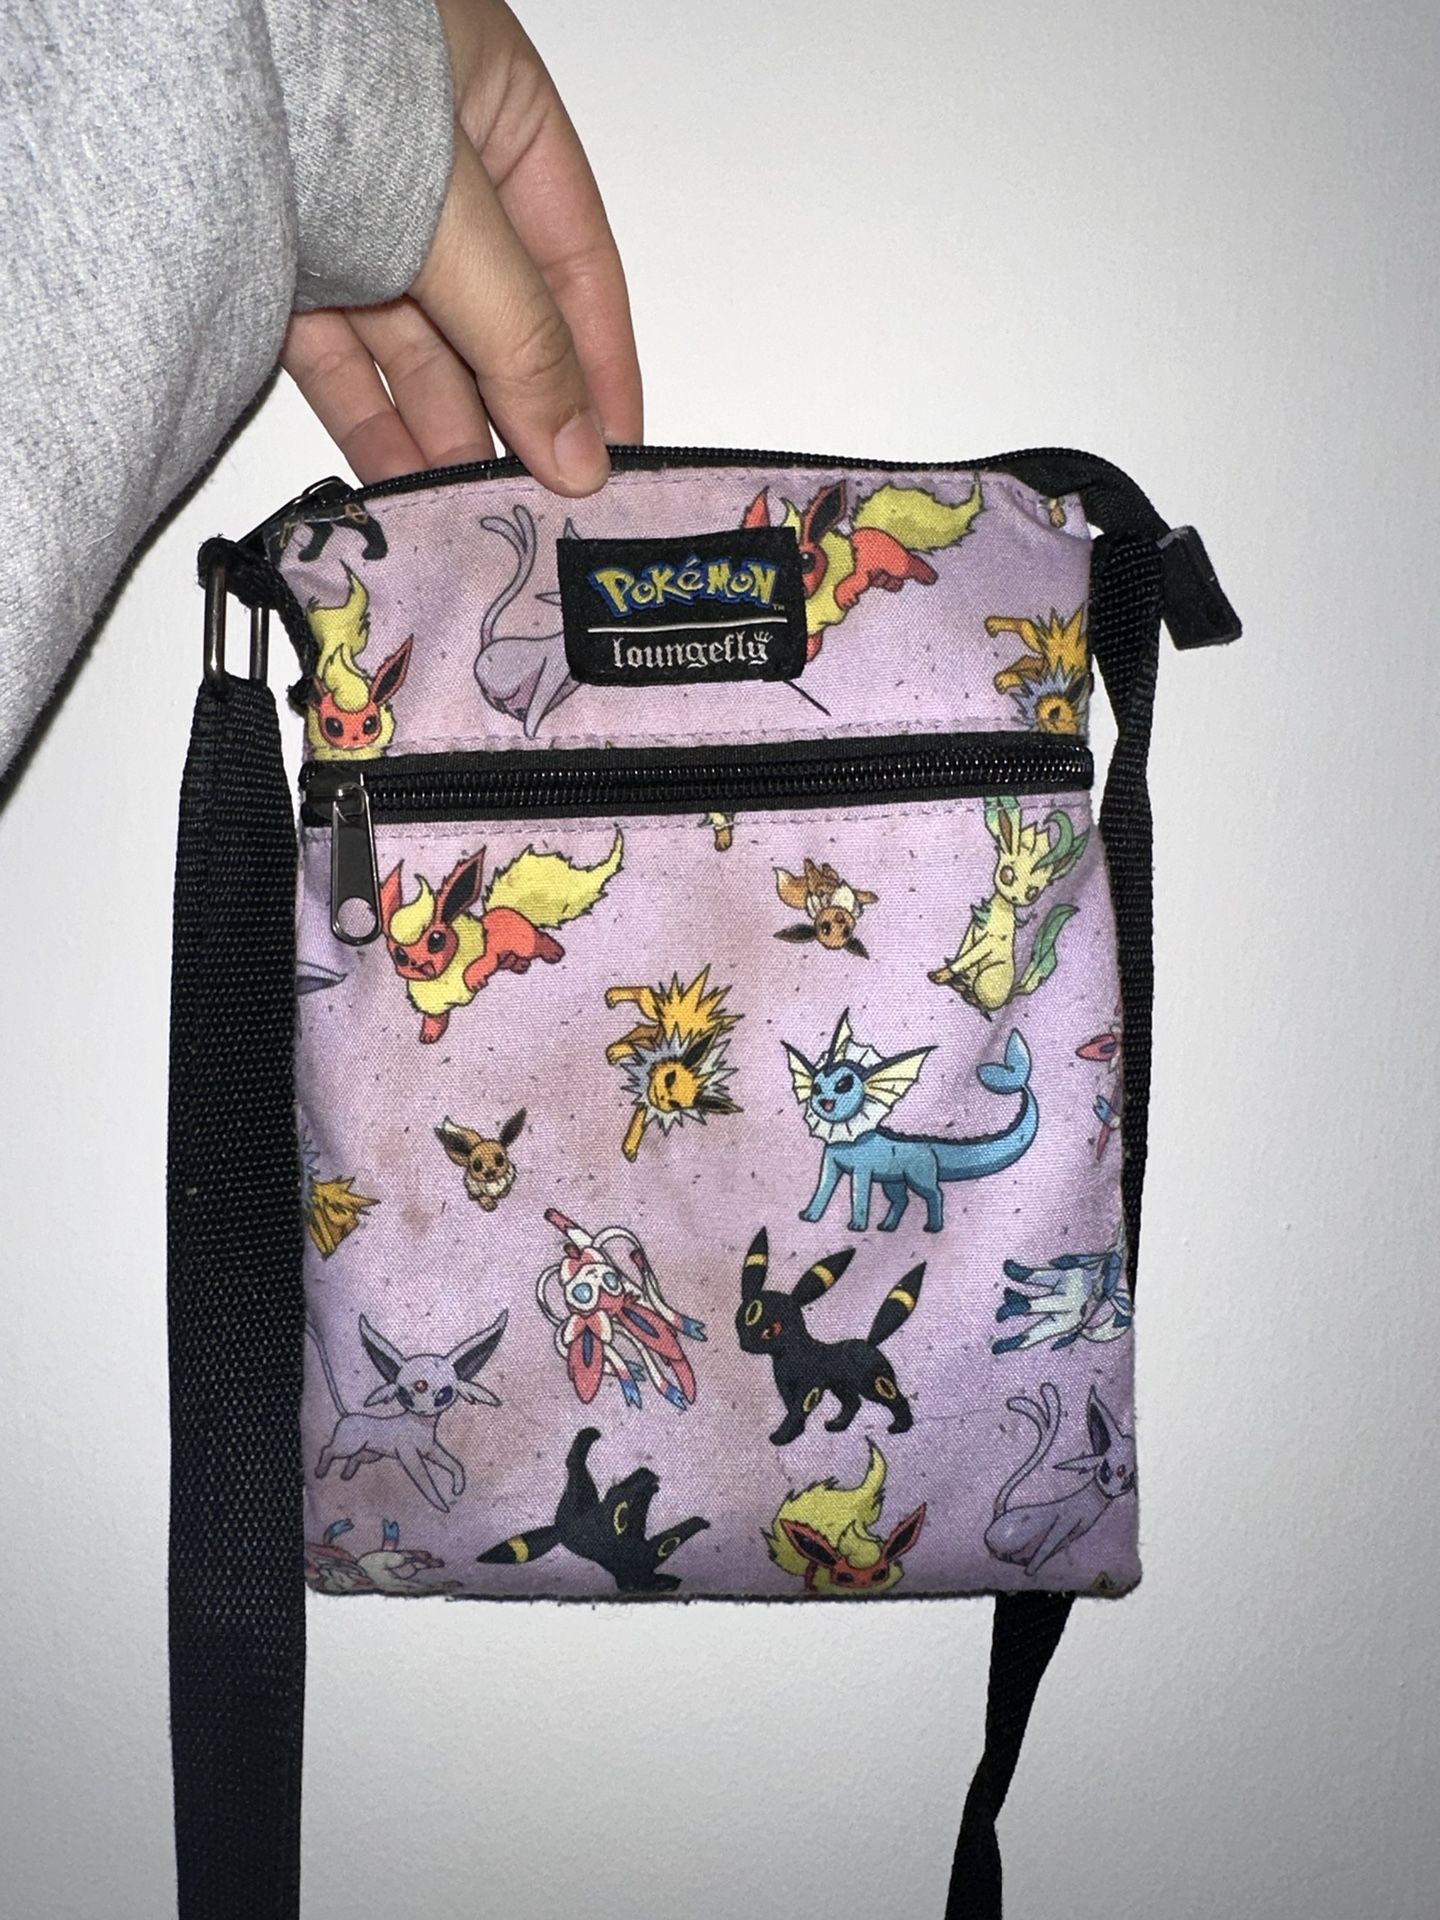 pokemon loungefly bag